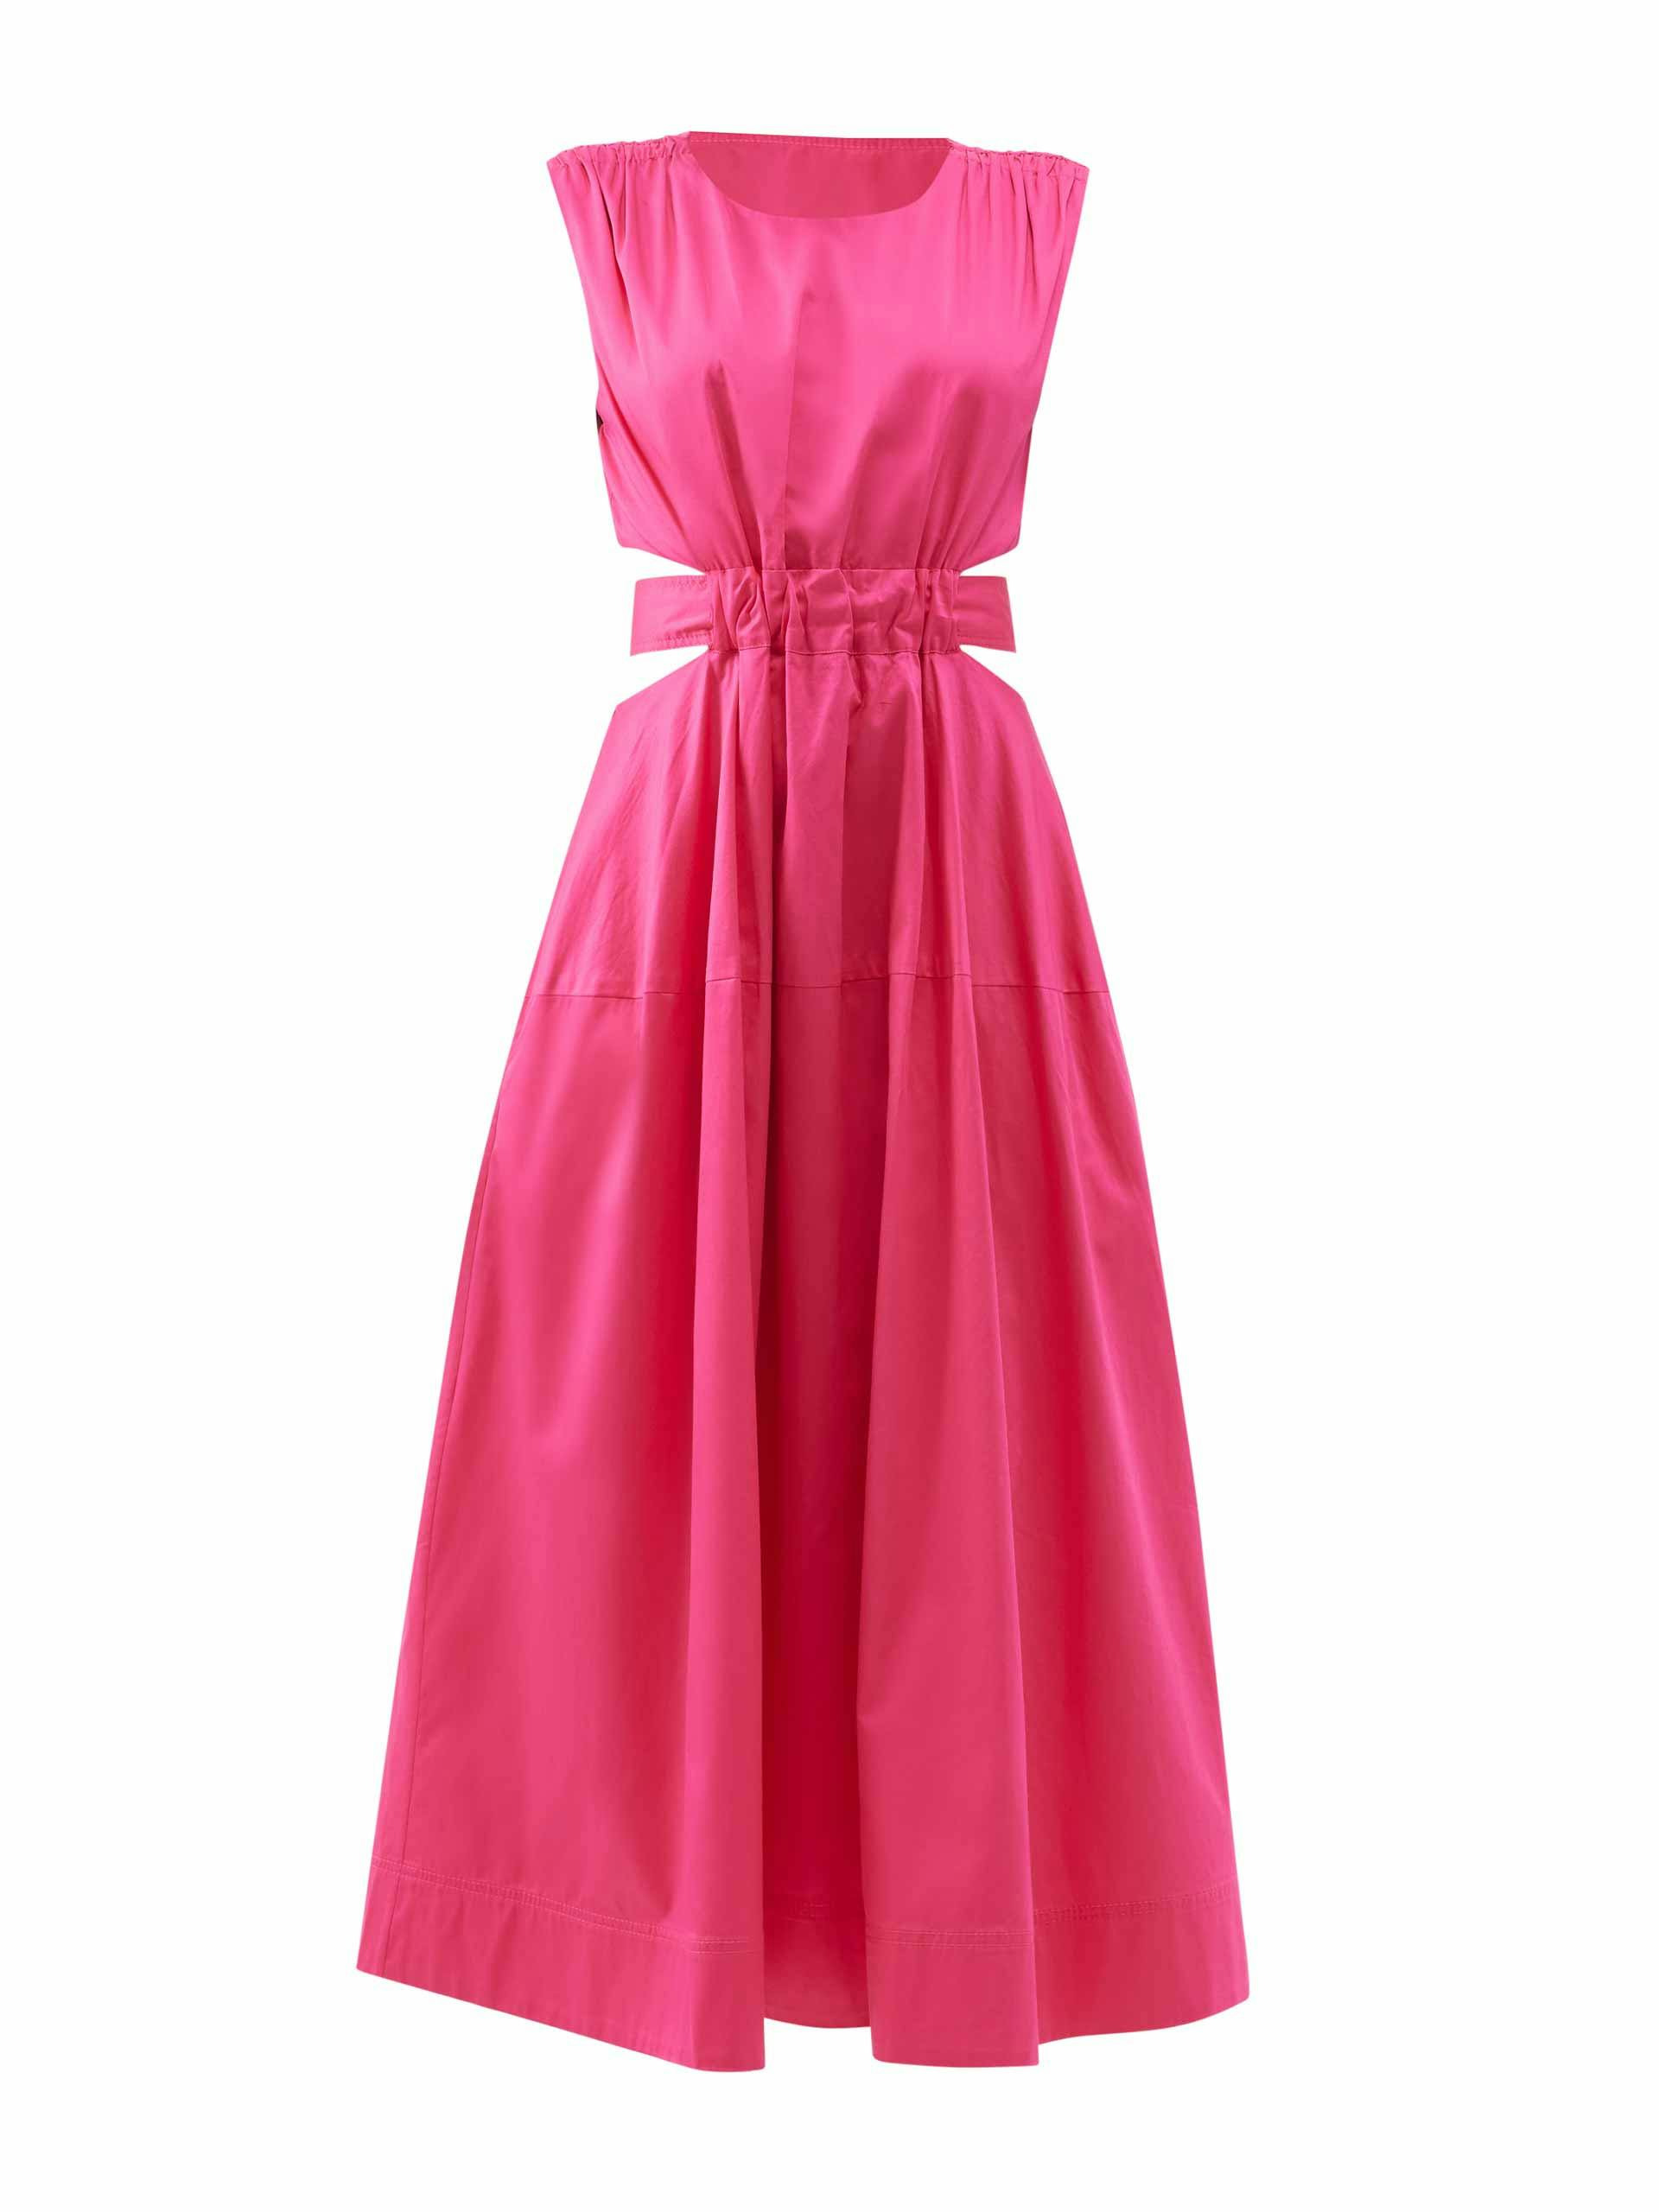 Pink back-tie cotton midi dress